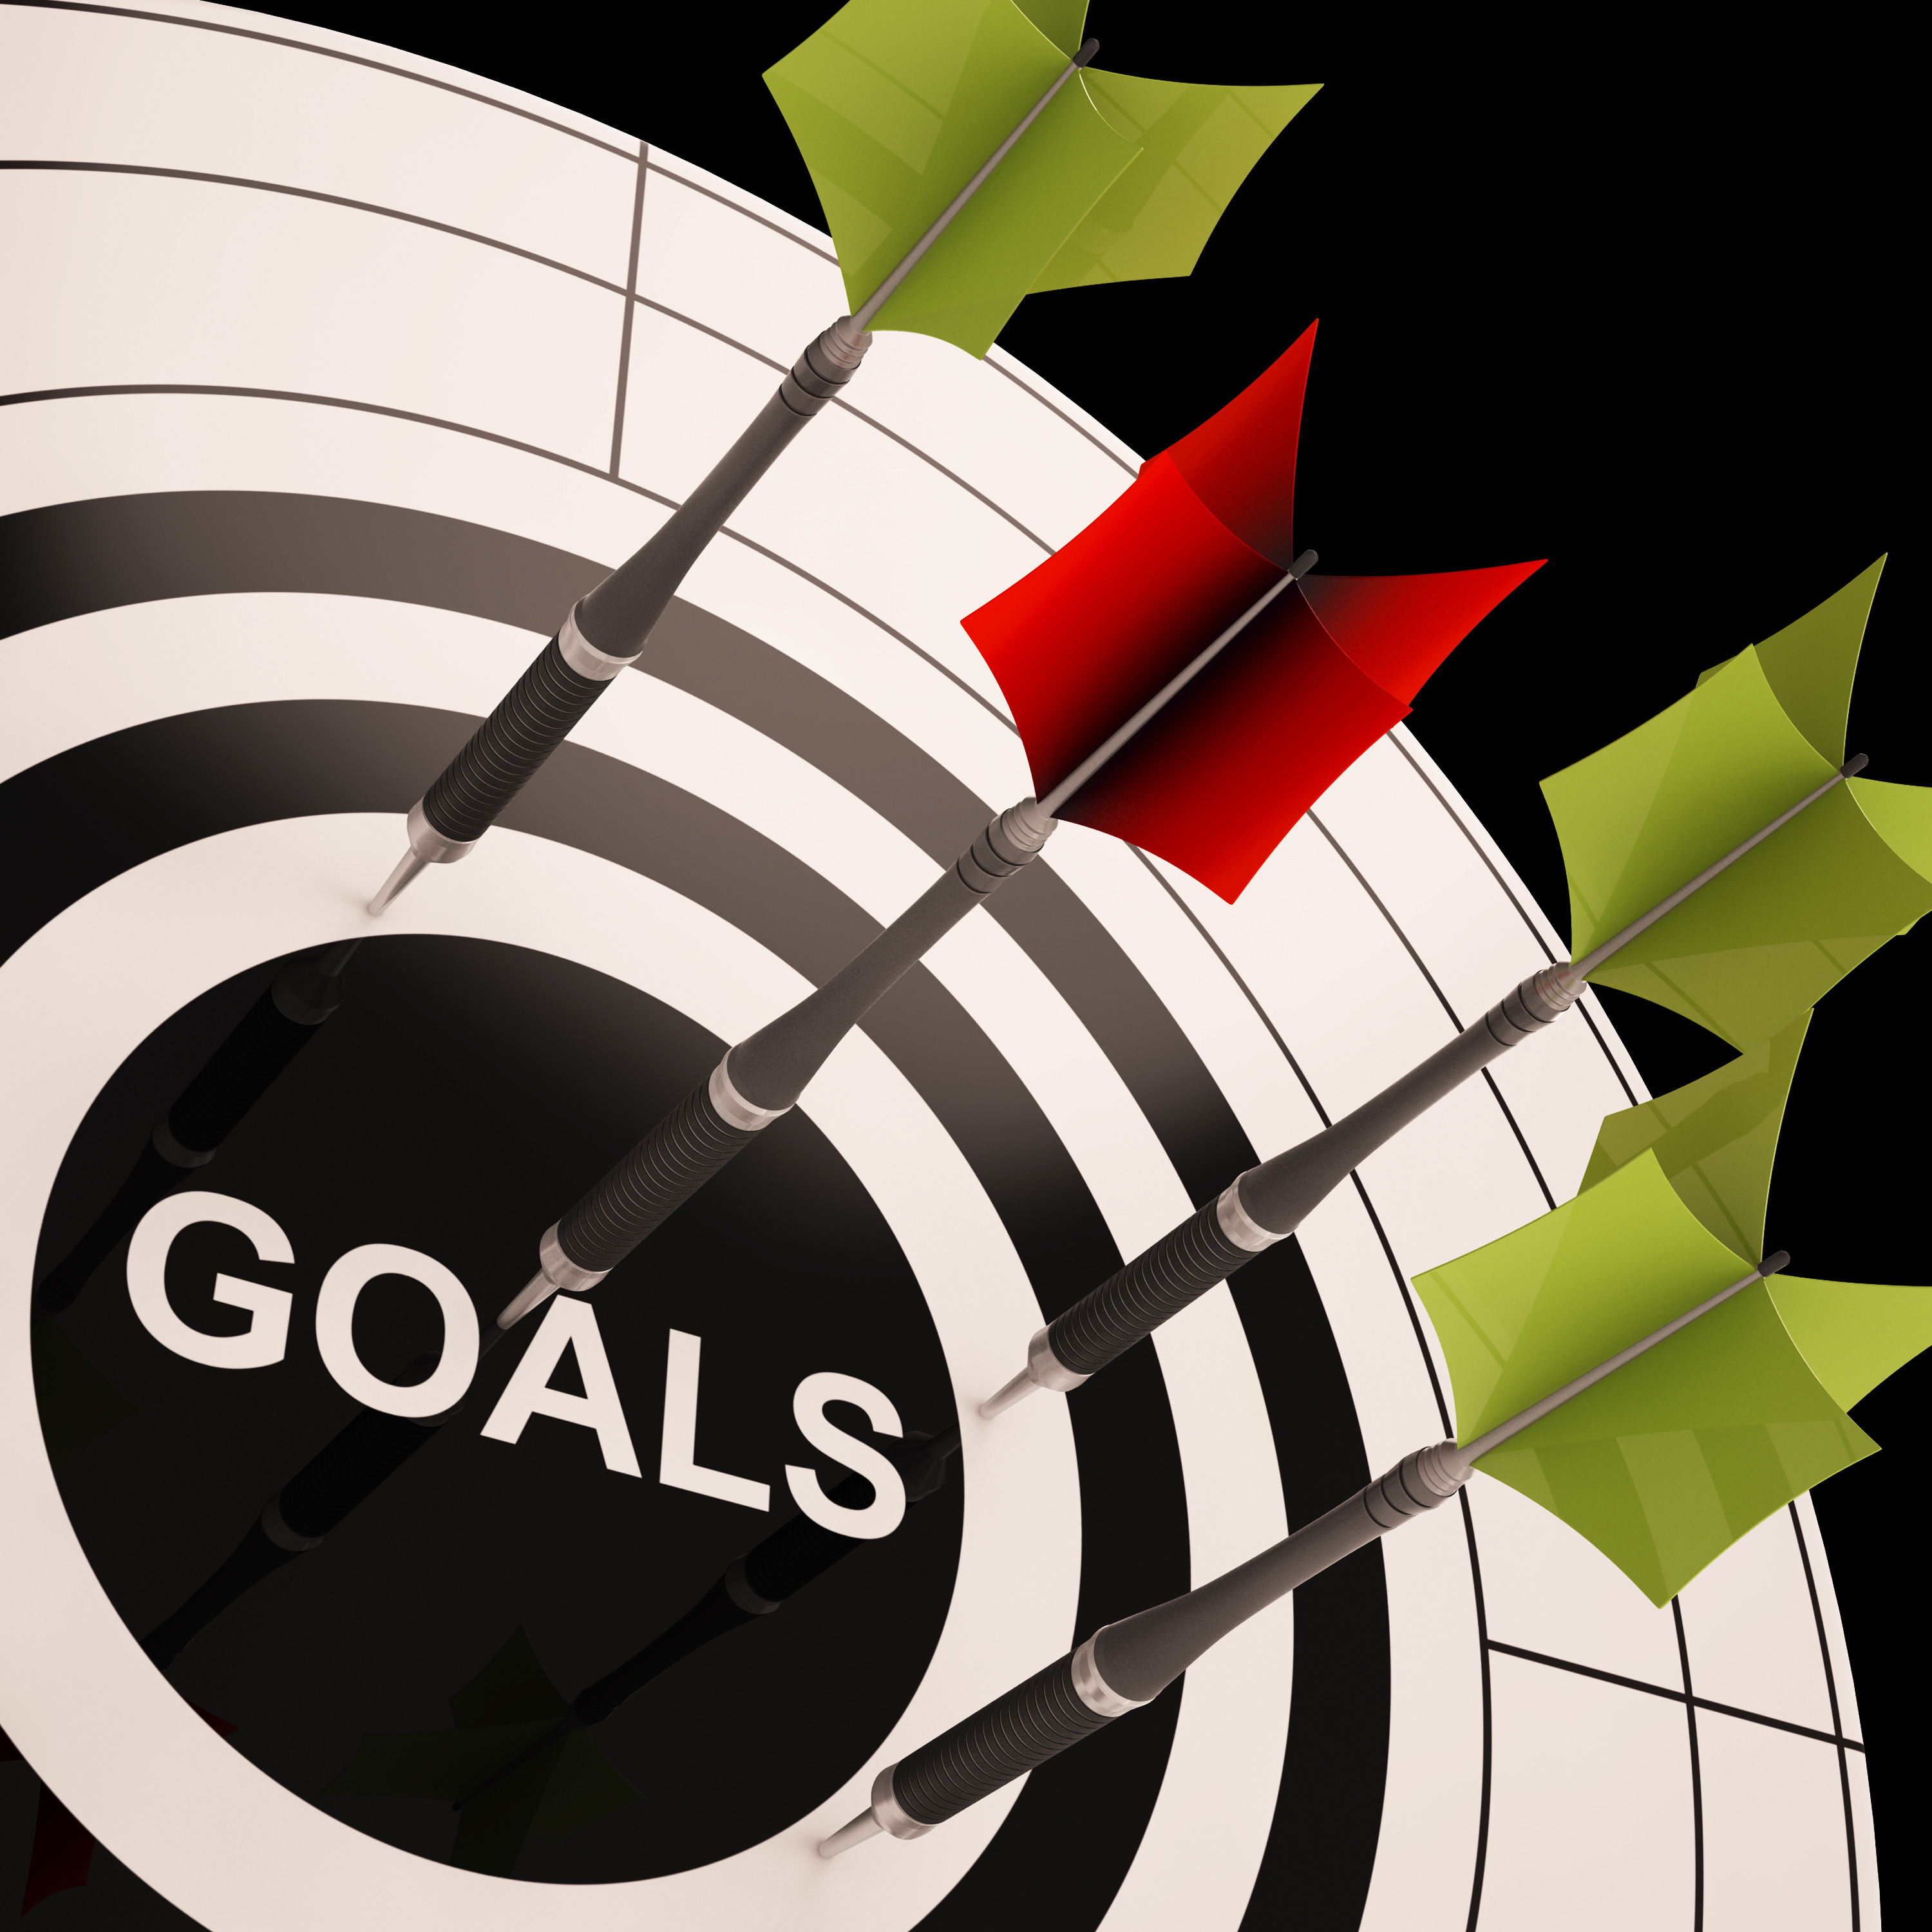 Goals On Dartboard Shows Aspired Objectives - DeLoresPressley ...